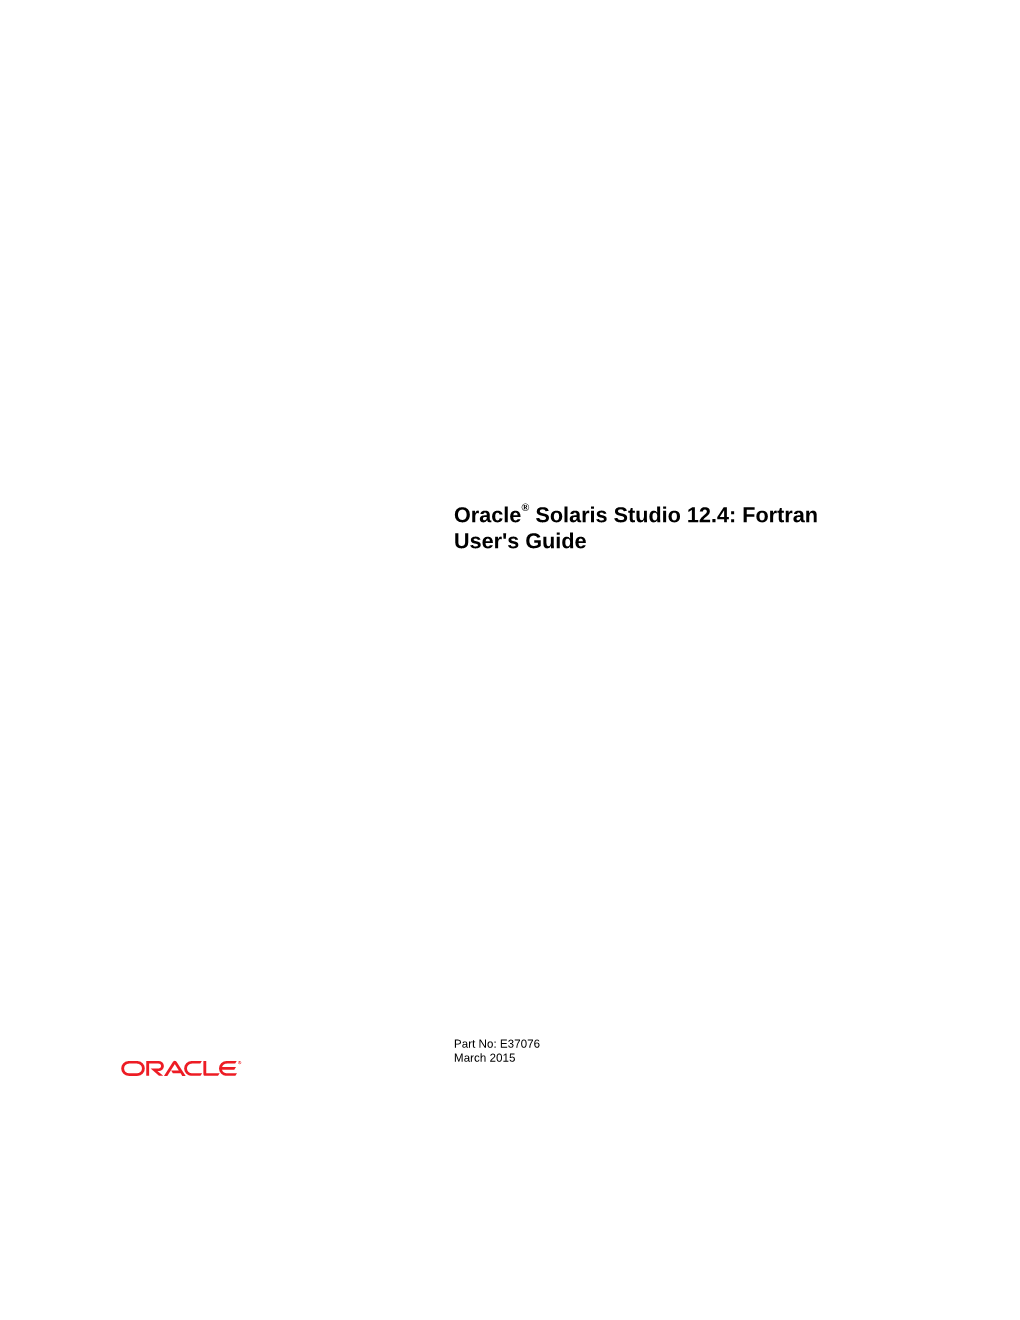 Oracle® Solaris Studio 12.4: Fortran User's Guide